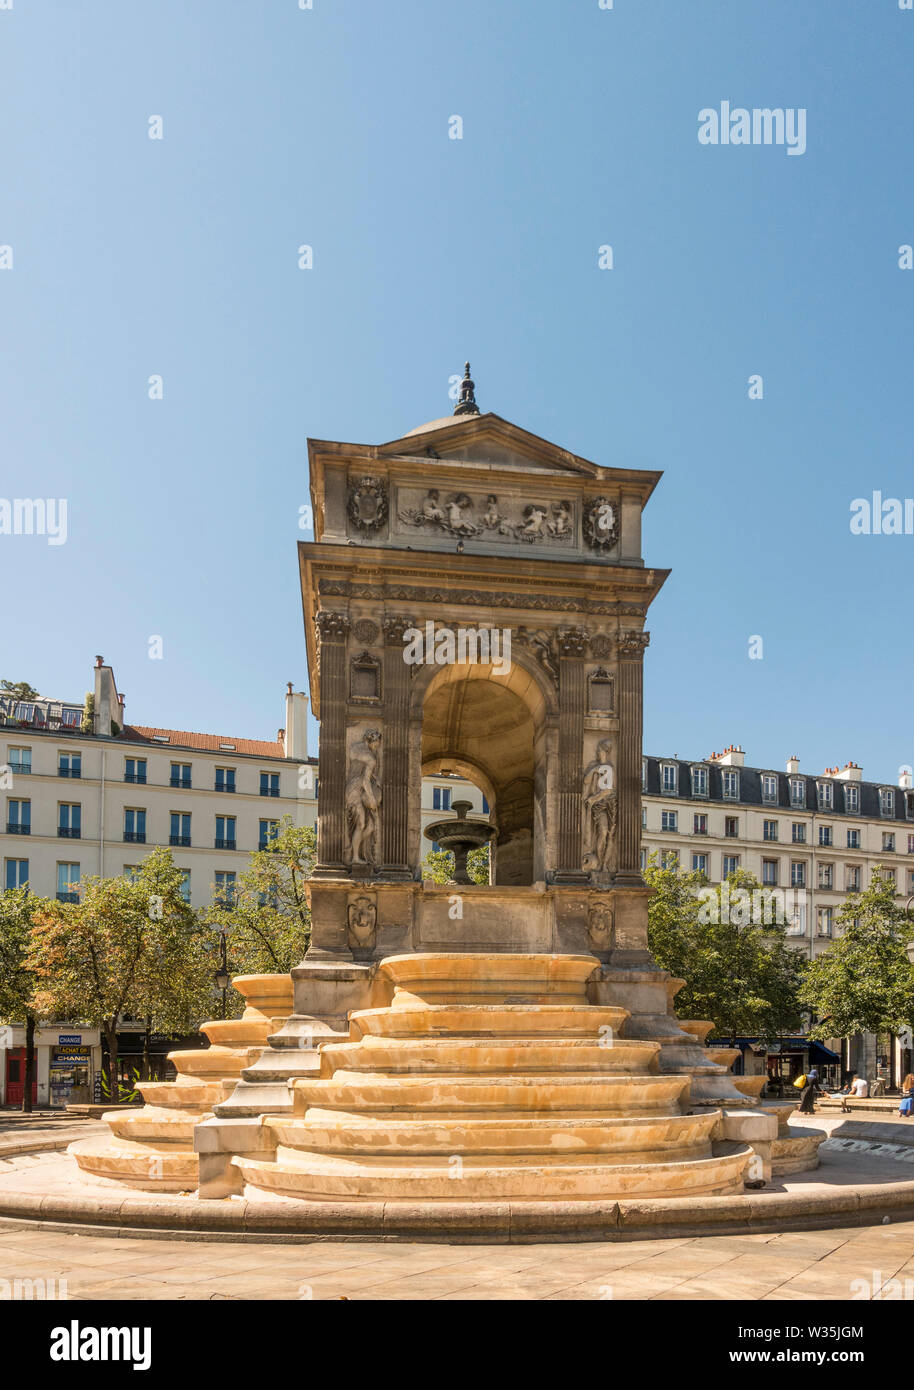 Fontaine des Innocents, monumental public fountain located on the place Joachim-du-Bellay, 1st arrondissement of Paris, France Stock Photo